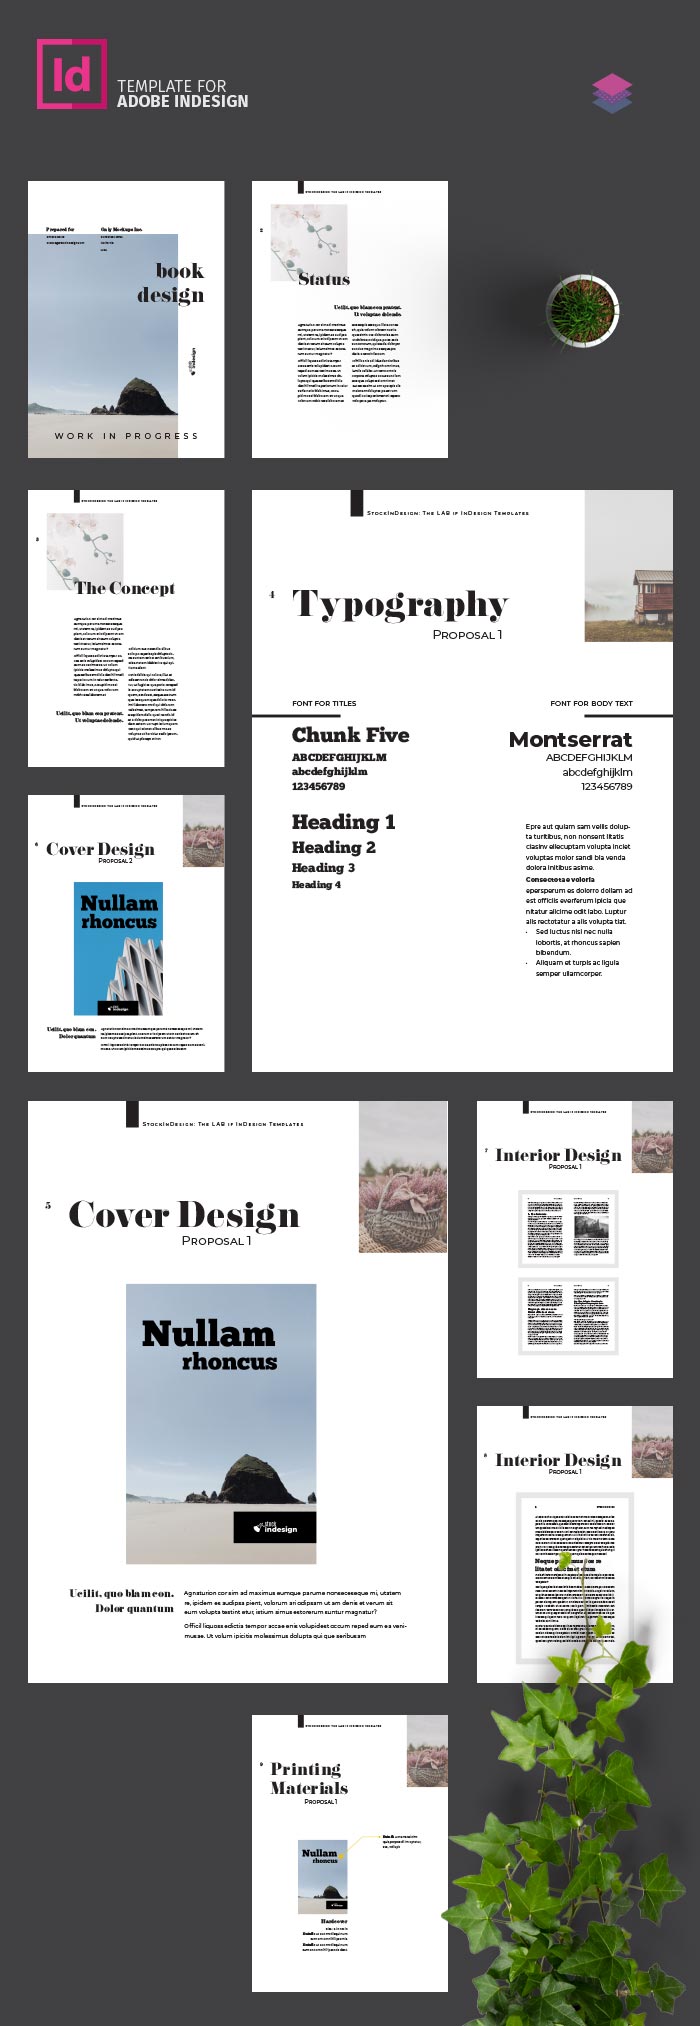 Work in progress: Book Design